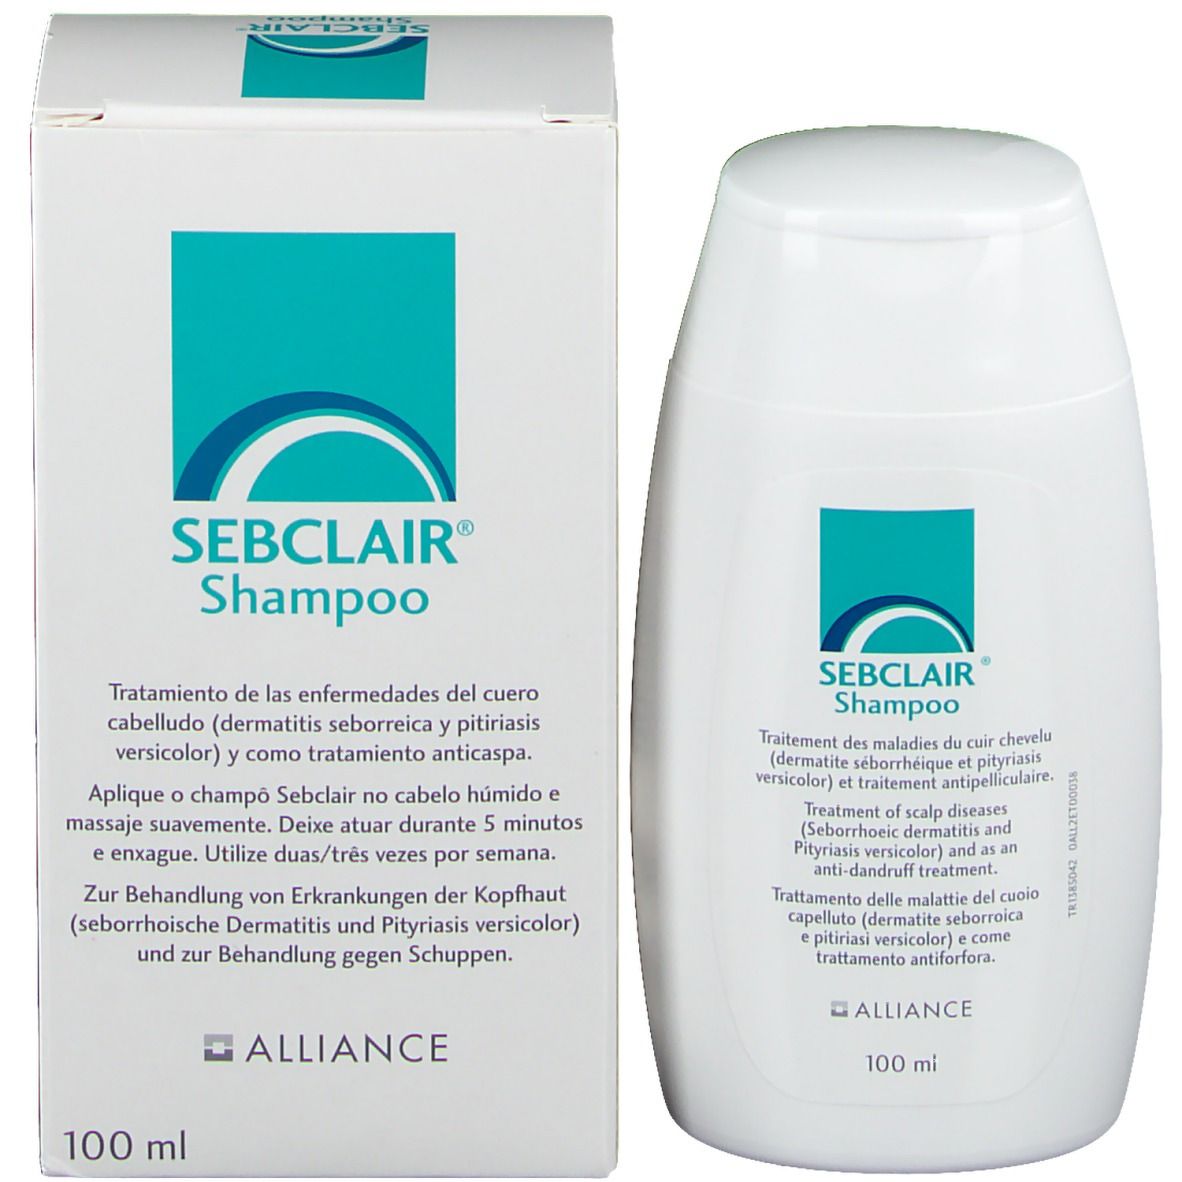 Sebclair® Shampoo